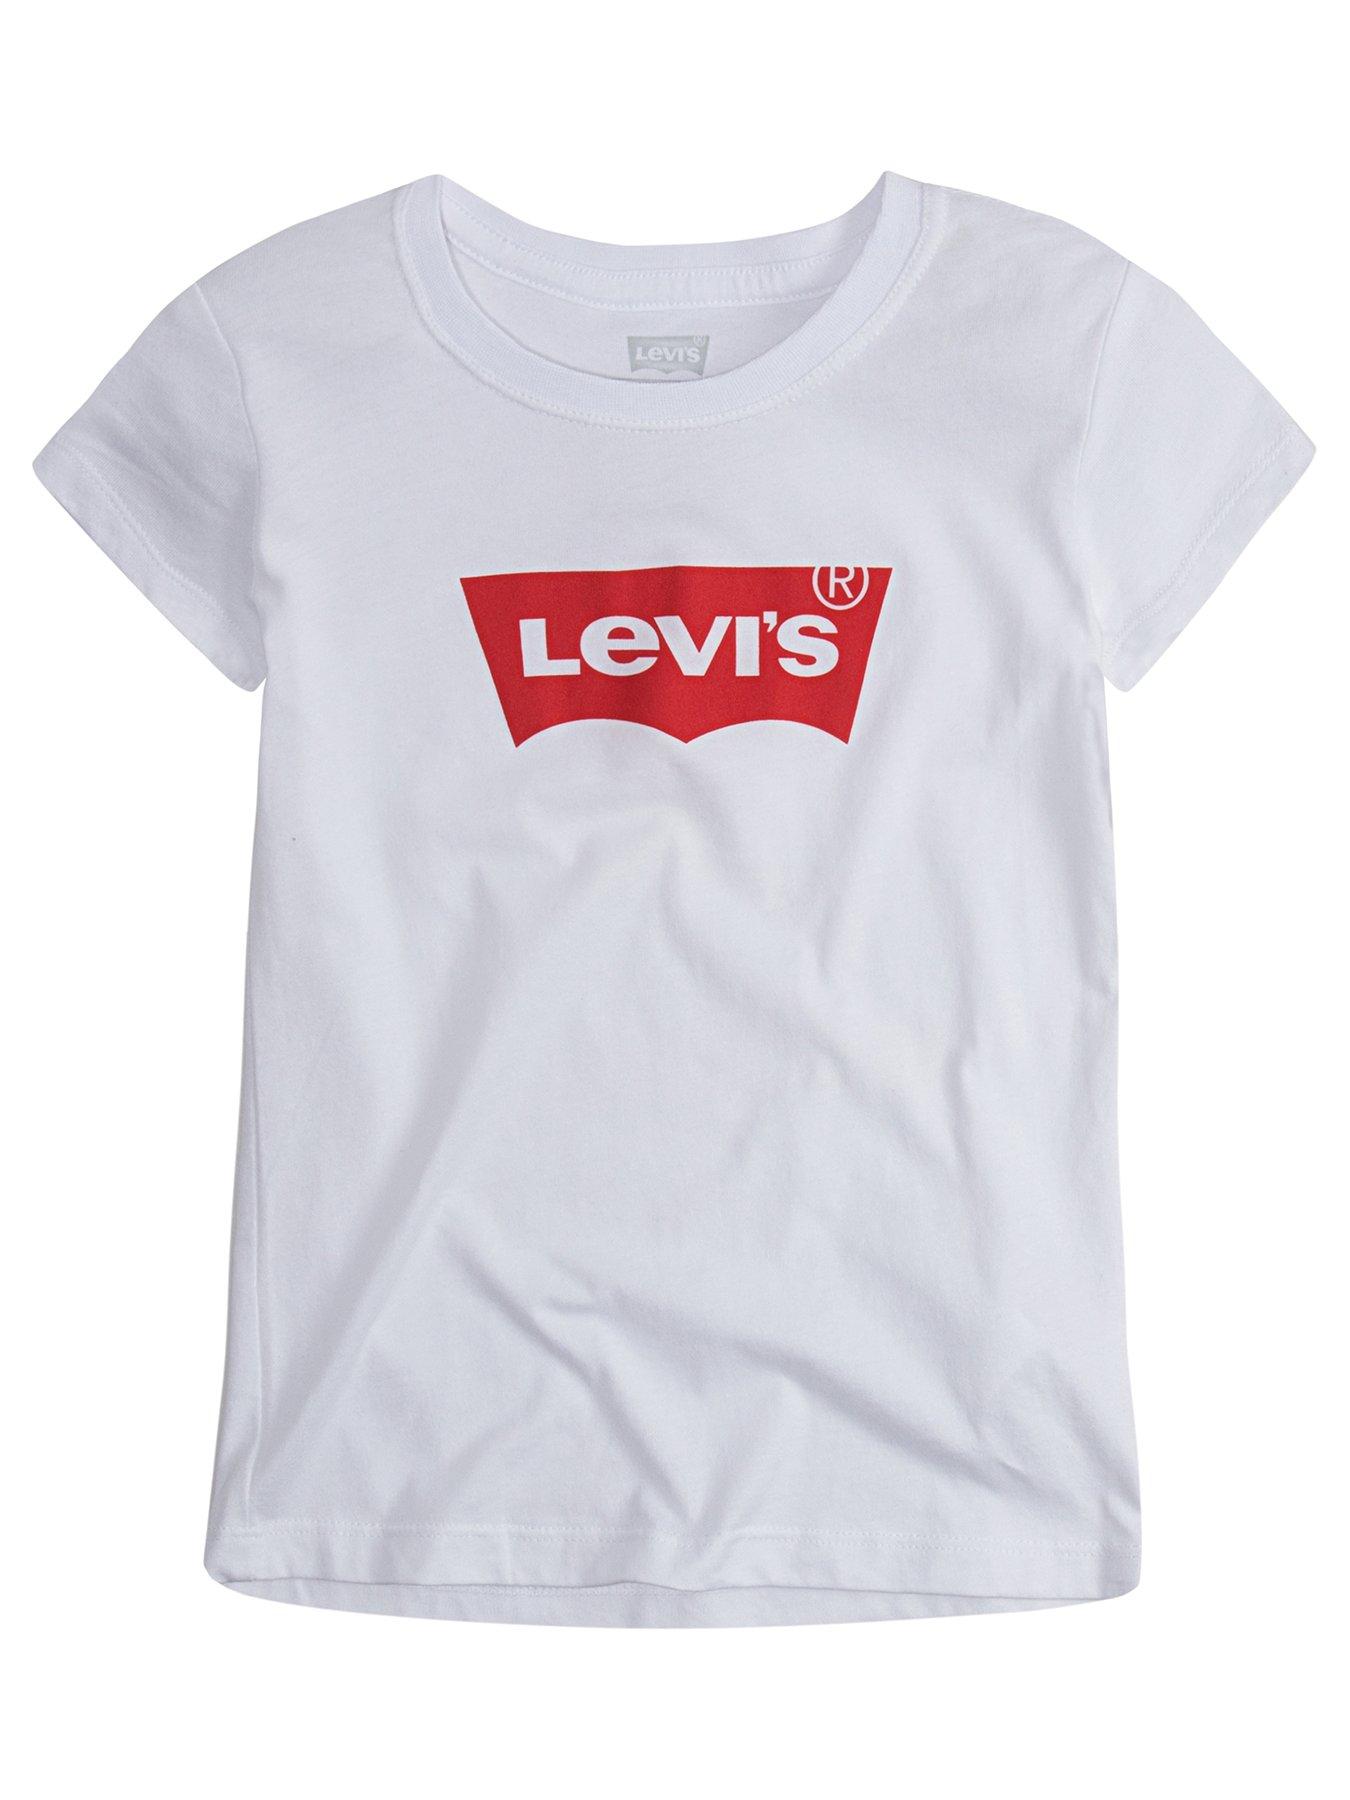 levi's kidswear uk